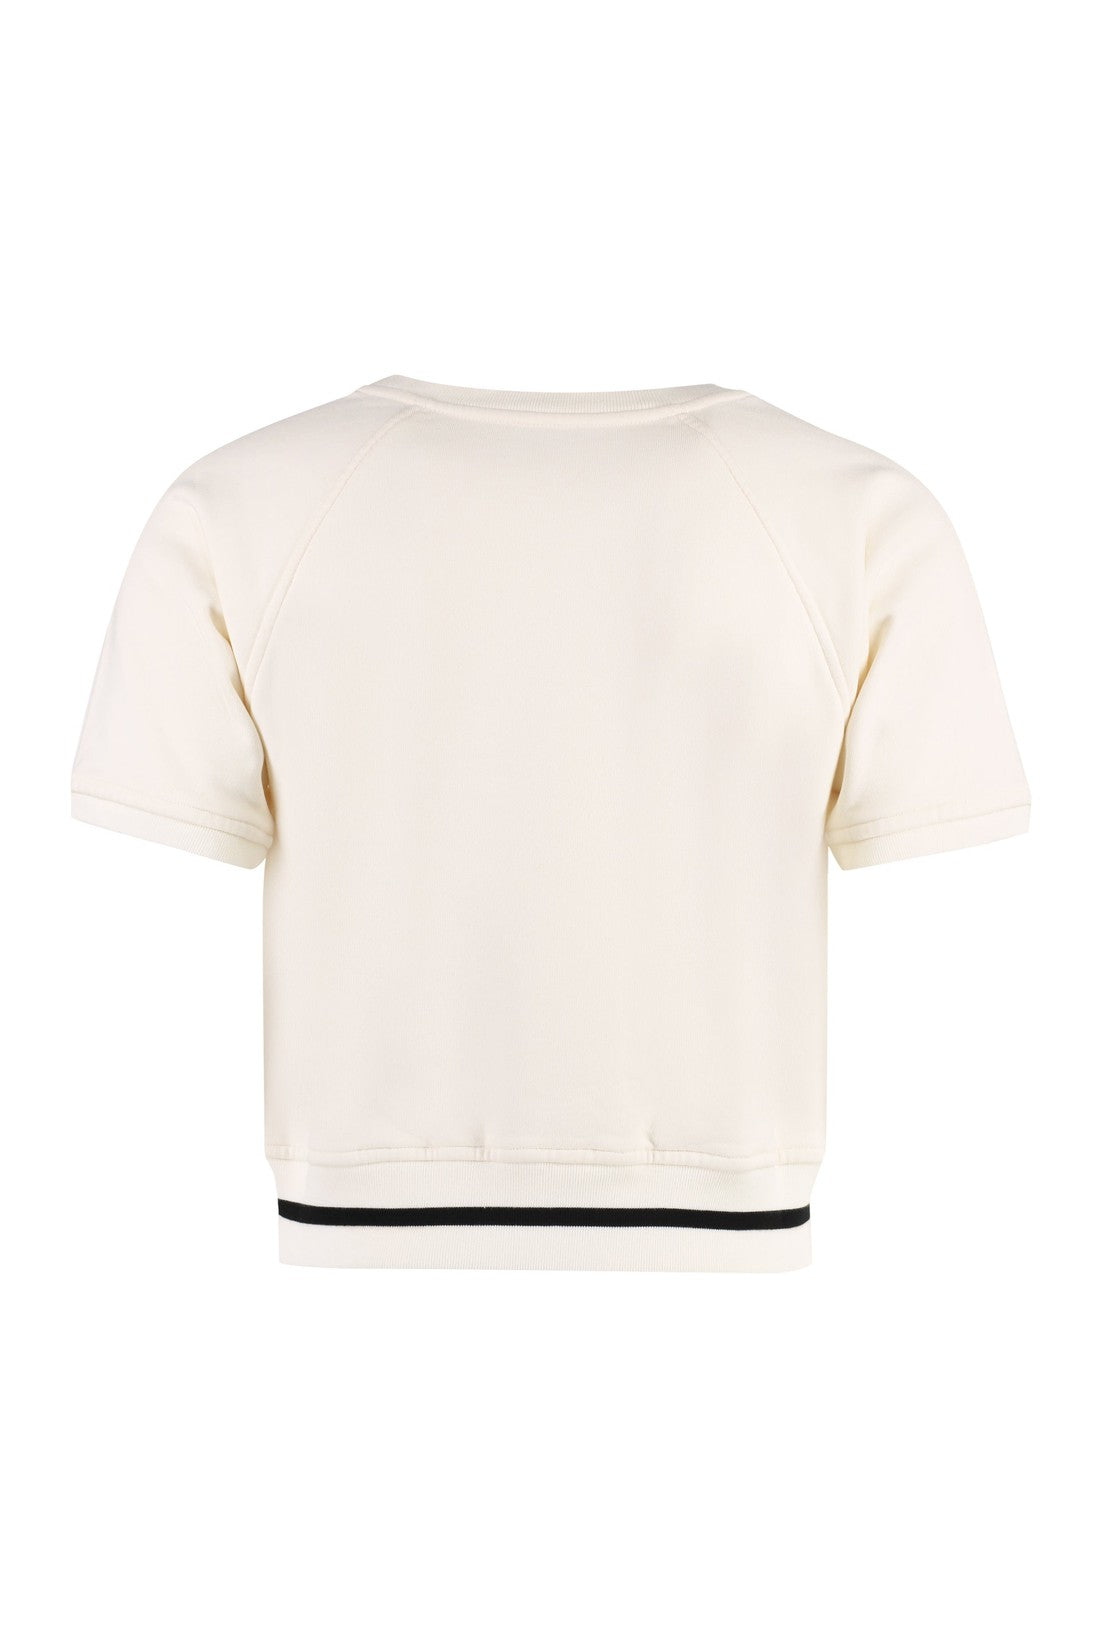 Bally-OUTLET-SALE-Short sleeved sweatshirt-ARCHIVIST